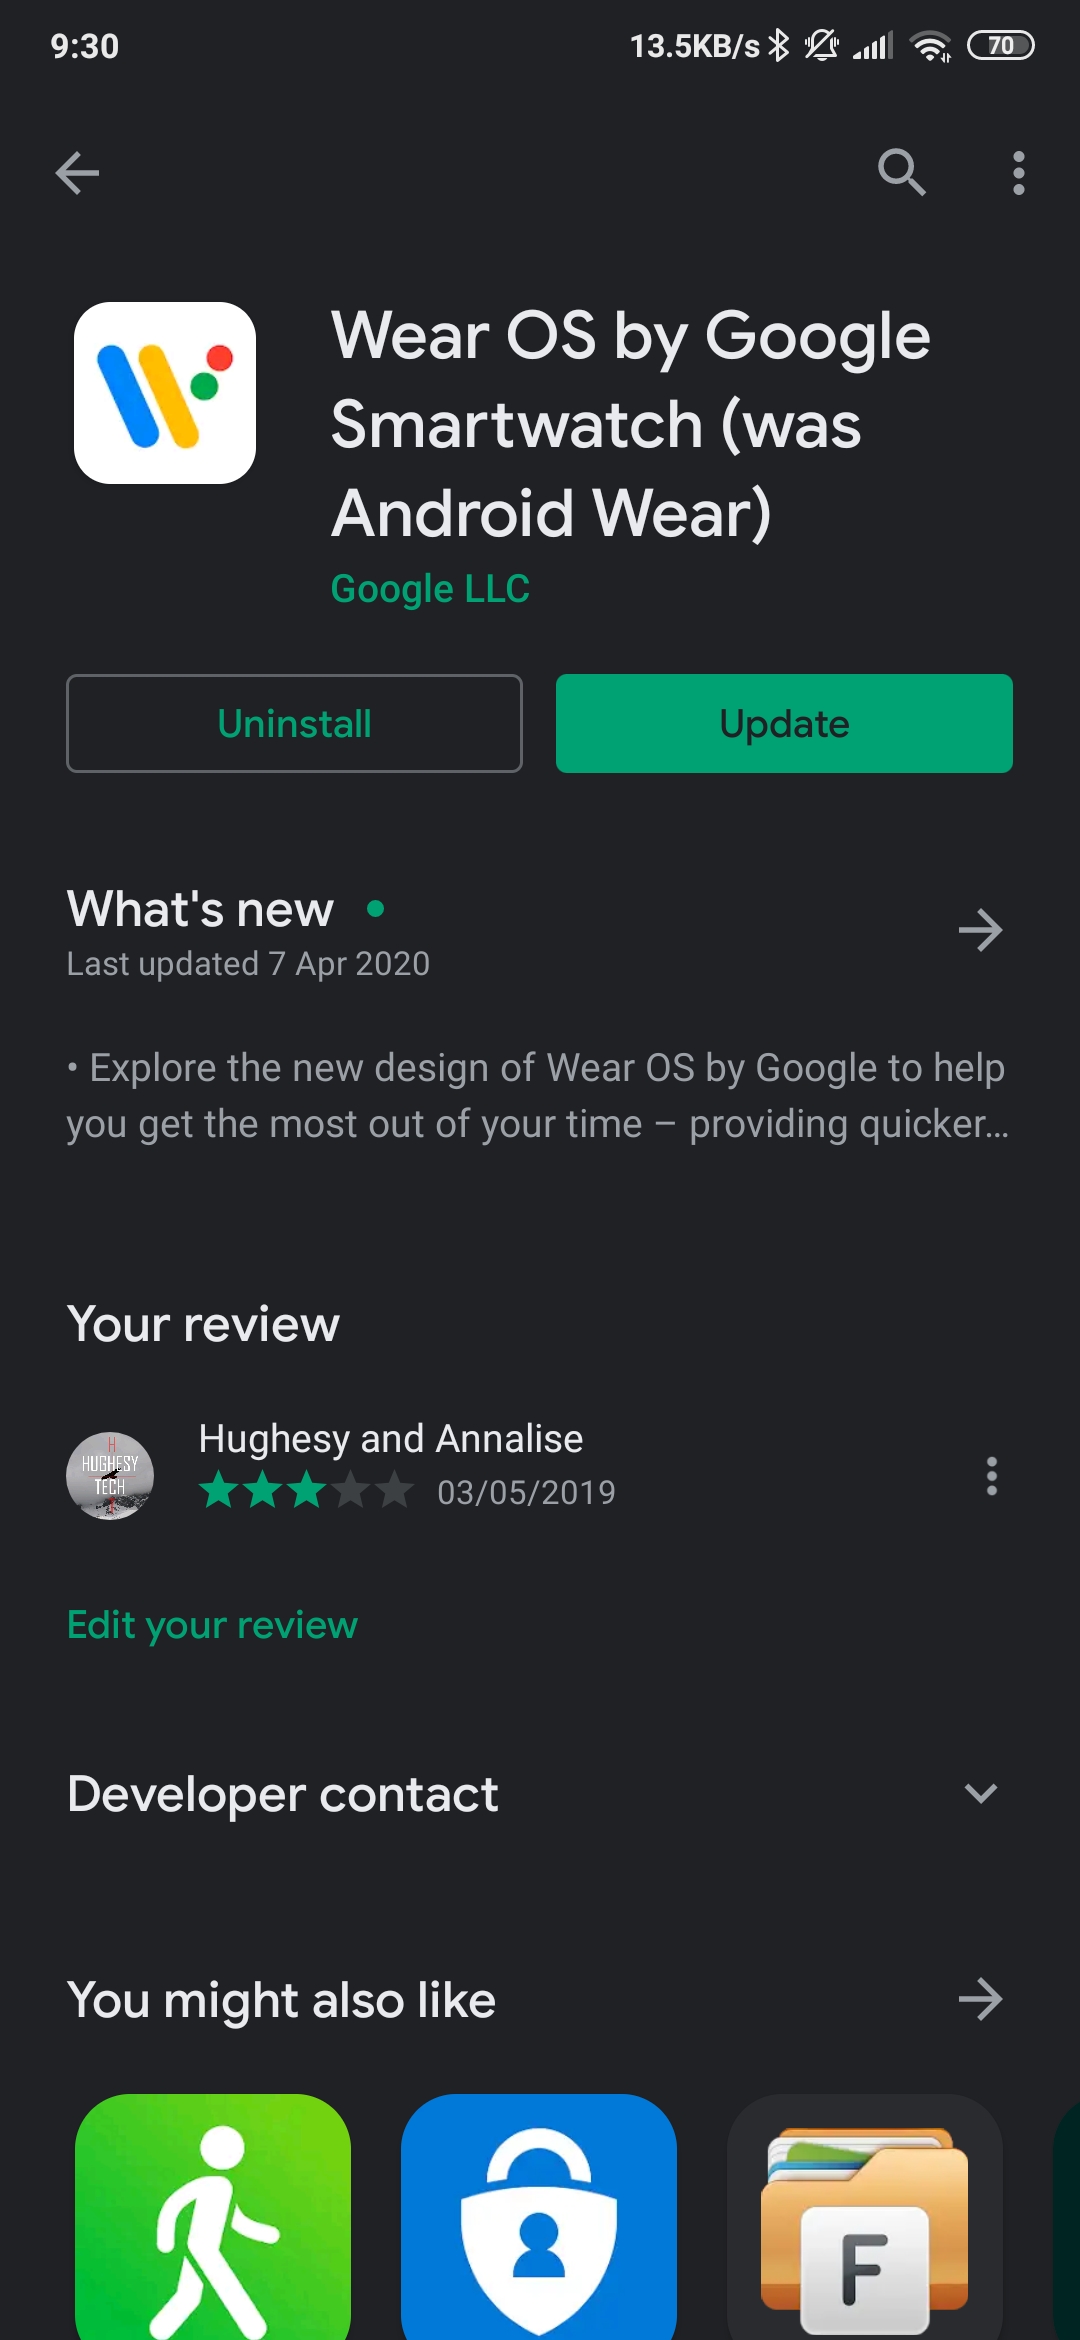 Google smartwatch Wear OS Android Wear